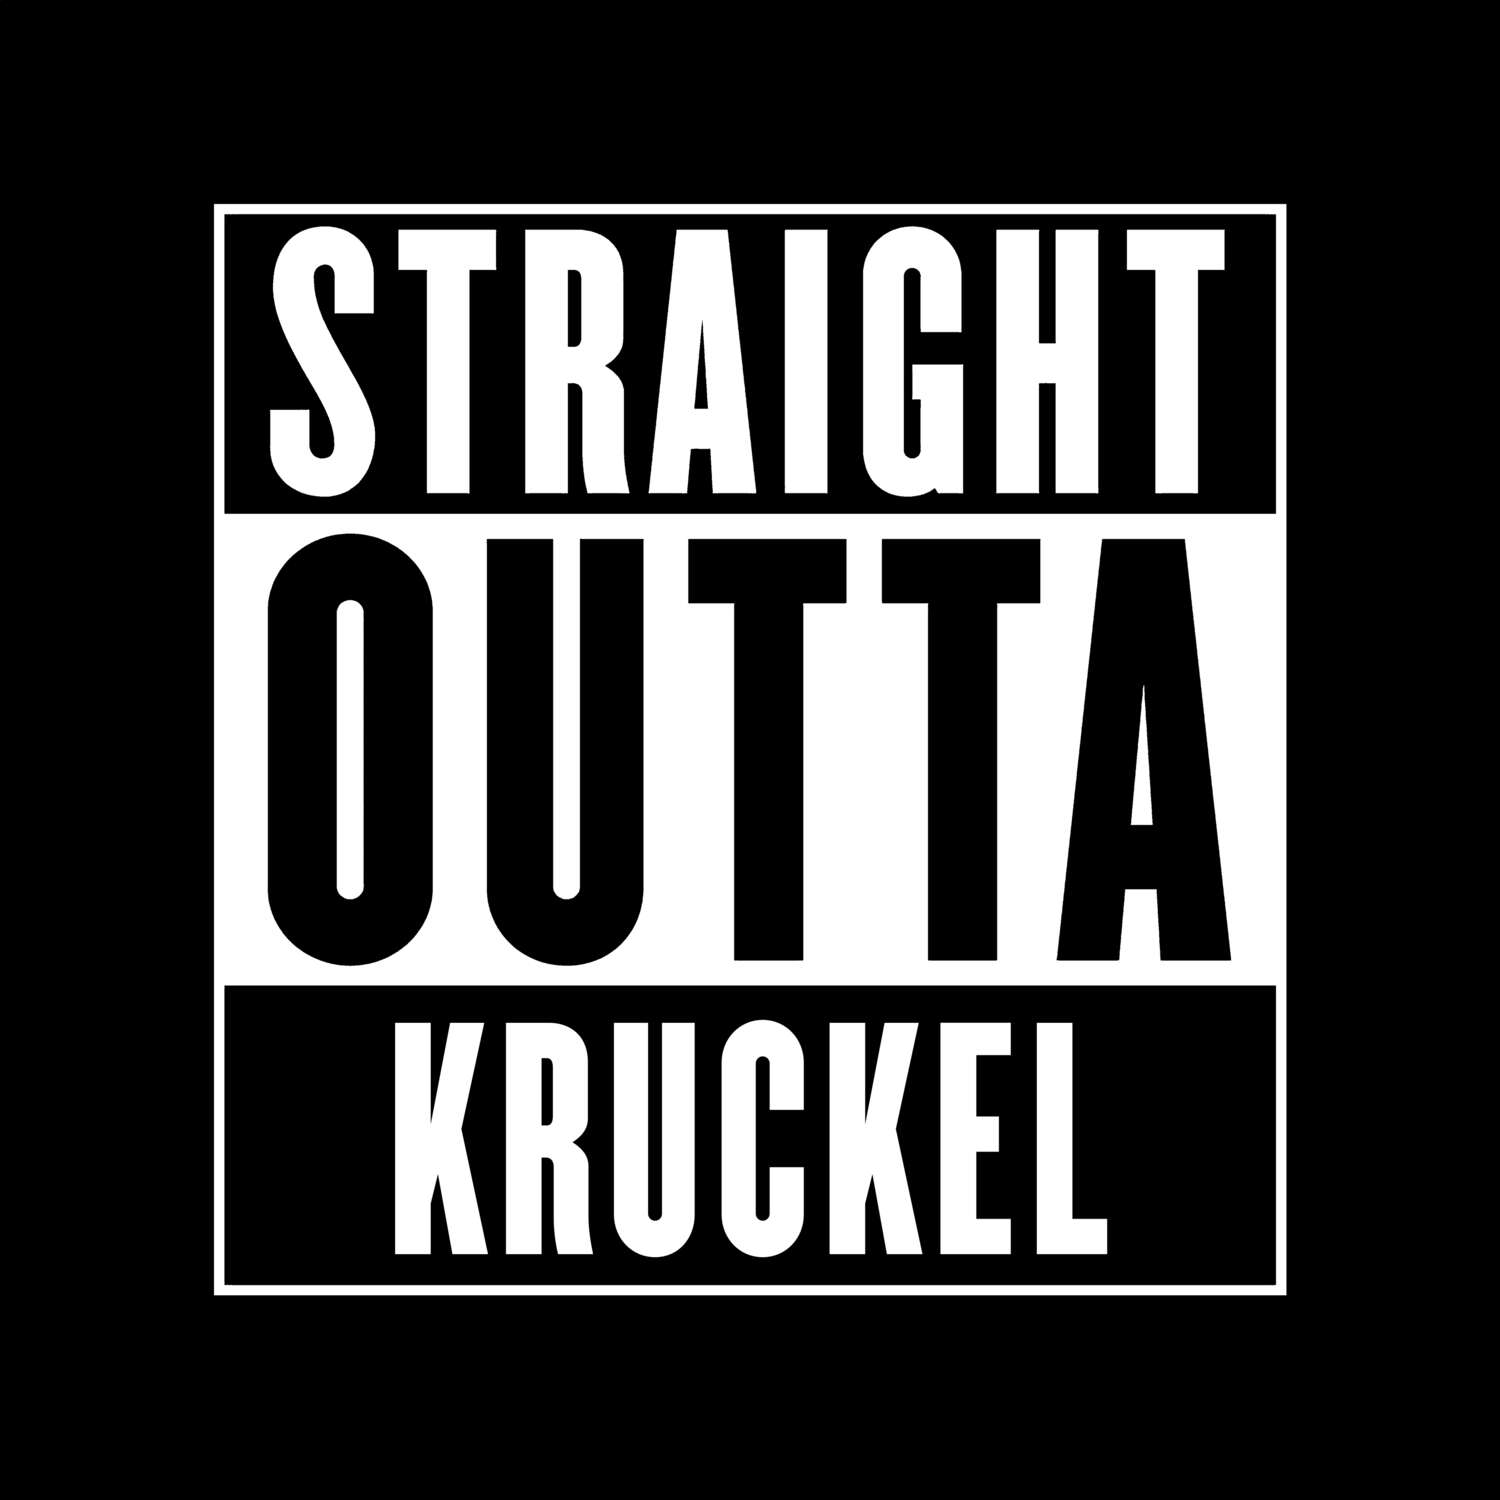 Kruckel T-Shirt »Straight Outta«